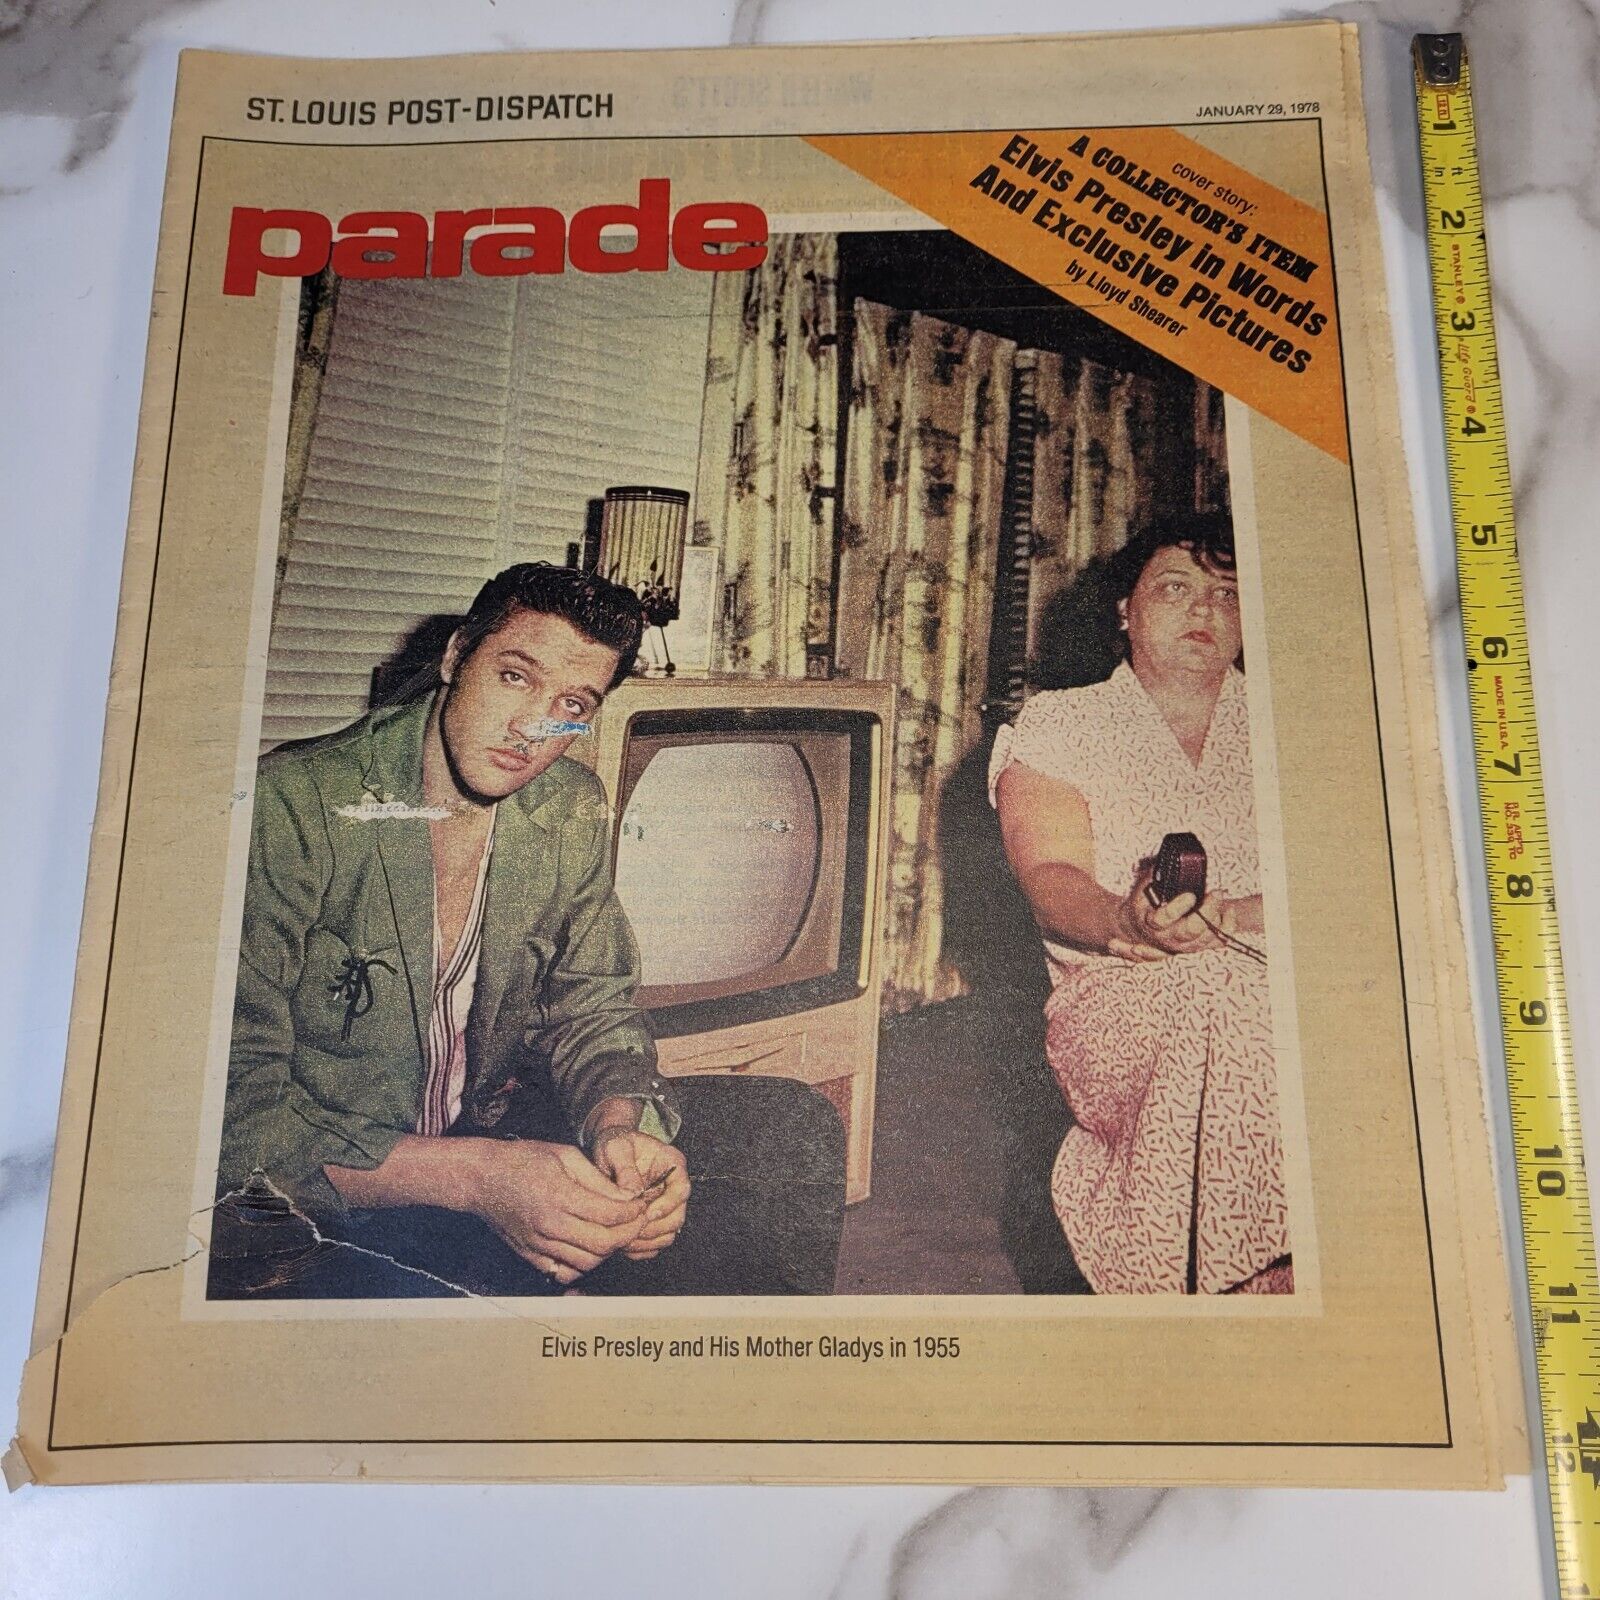 Jan. 29 1978 St Louis Post-Dispatch TV Magazine (Elvis Presley & Mother Gladys)